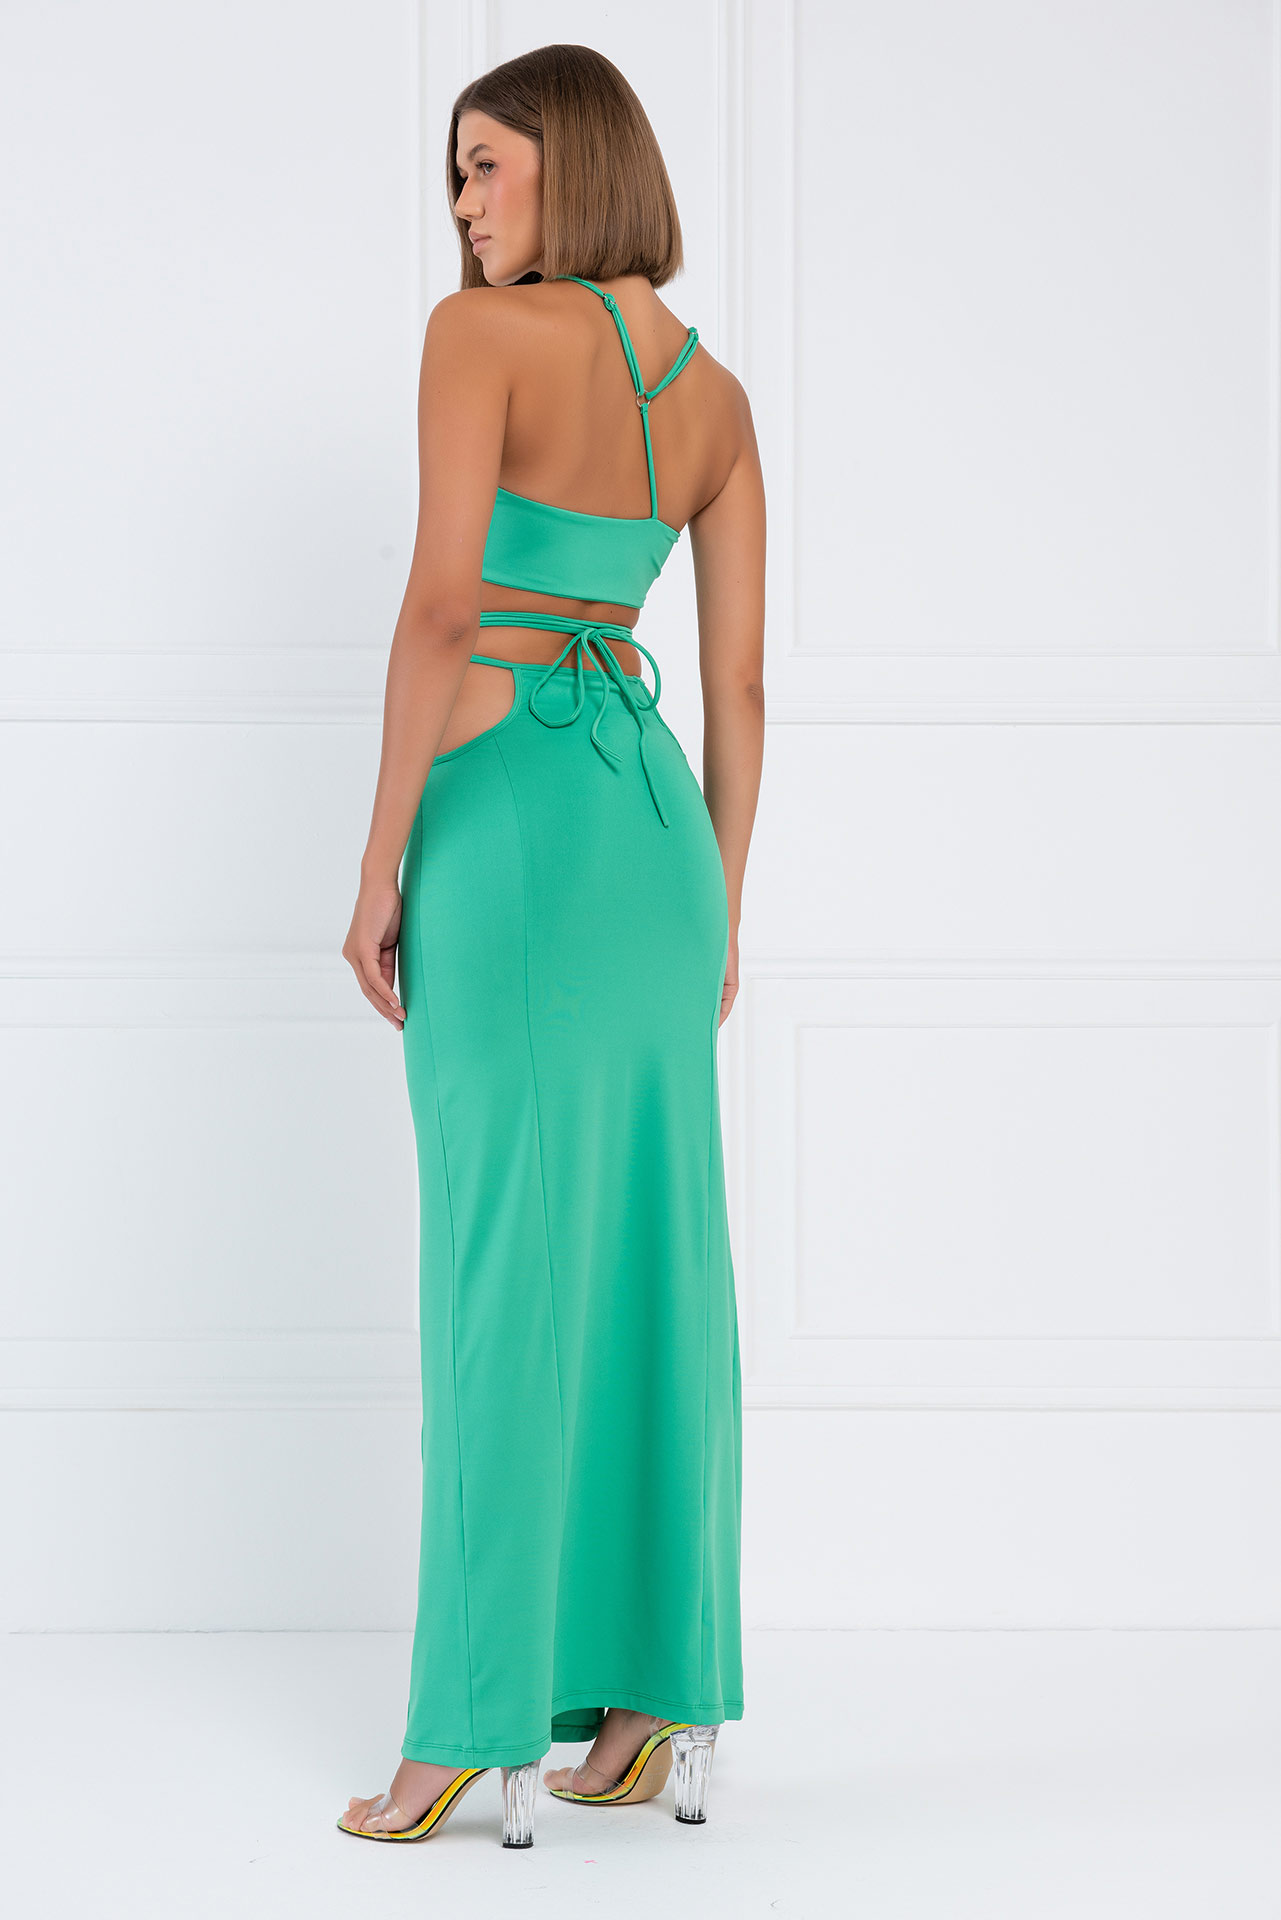 New Green Strap-Design Crop Cami & Skirt Set